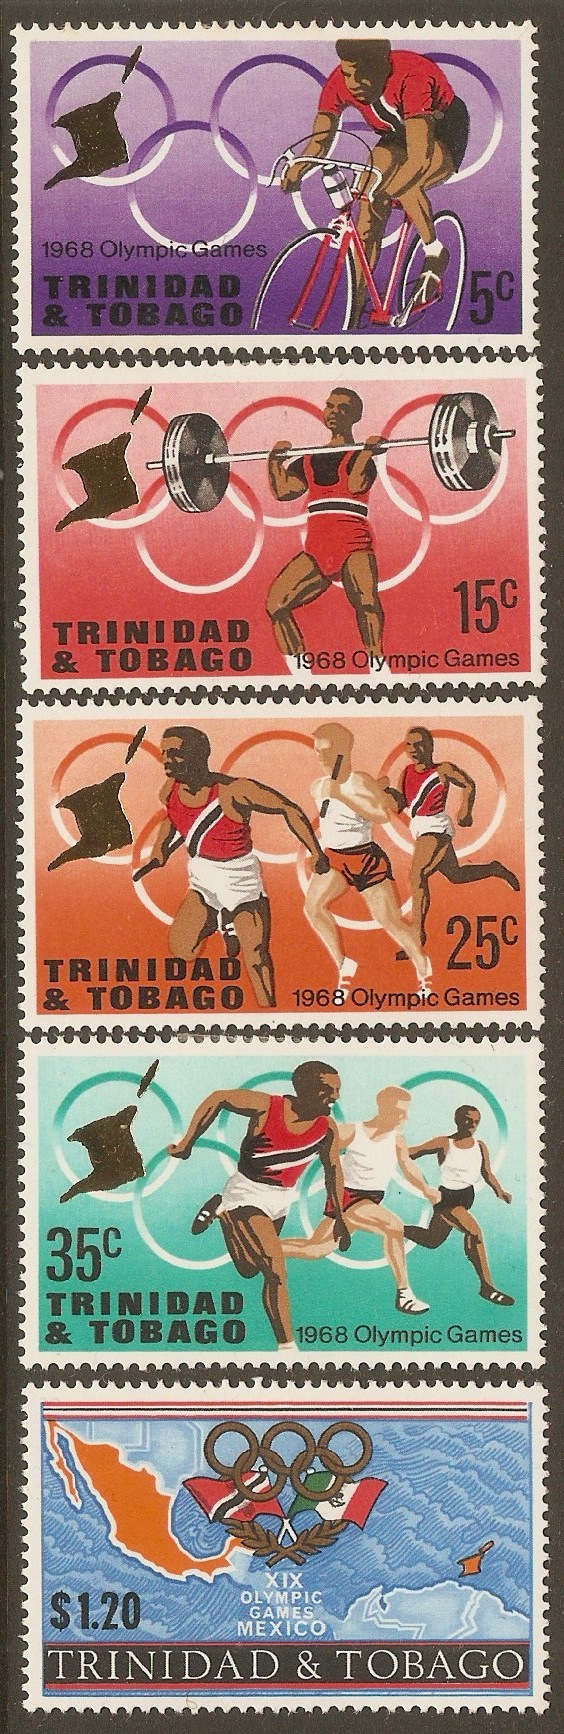 Trinidad & Tobago 1968 Olympic Games Set. SG334-SG338.